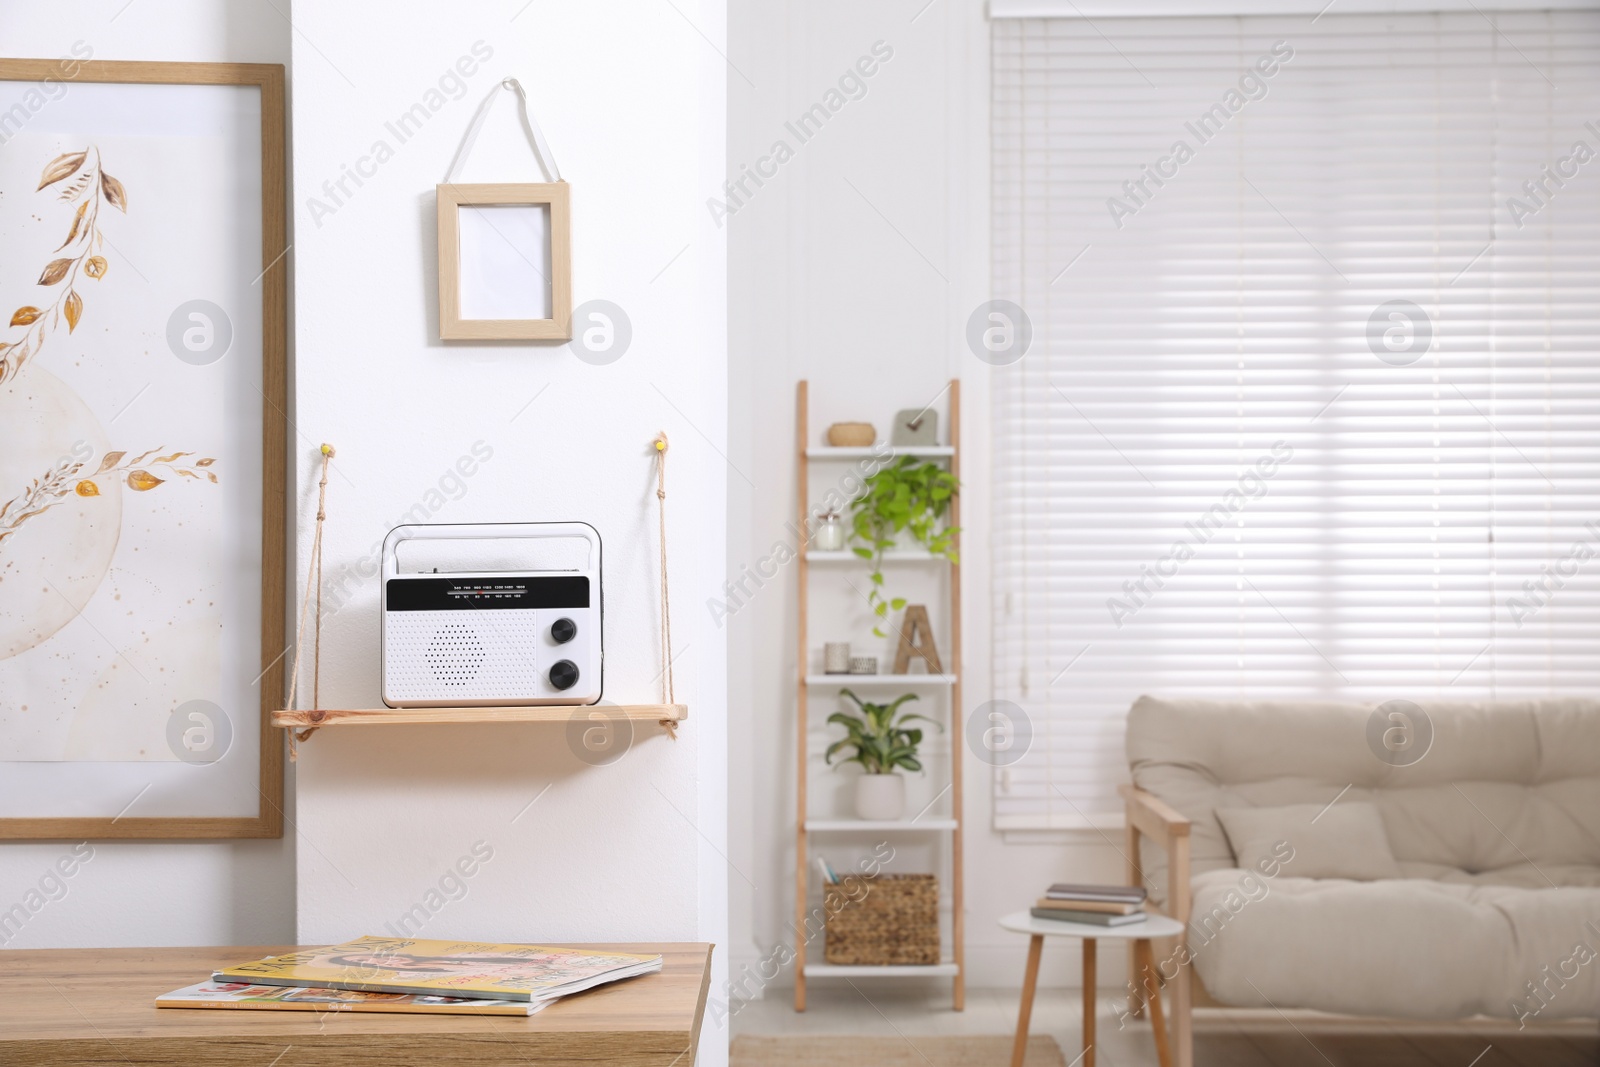 Photo of Stylish white radio on wooden shelf in living room interior